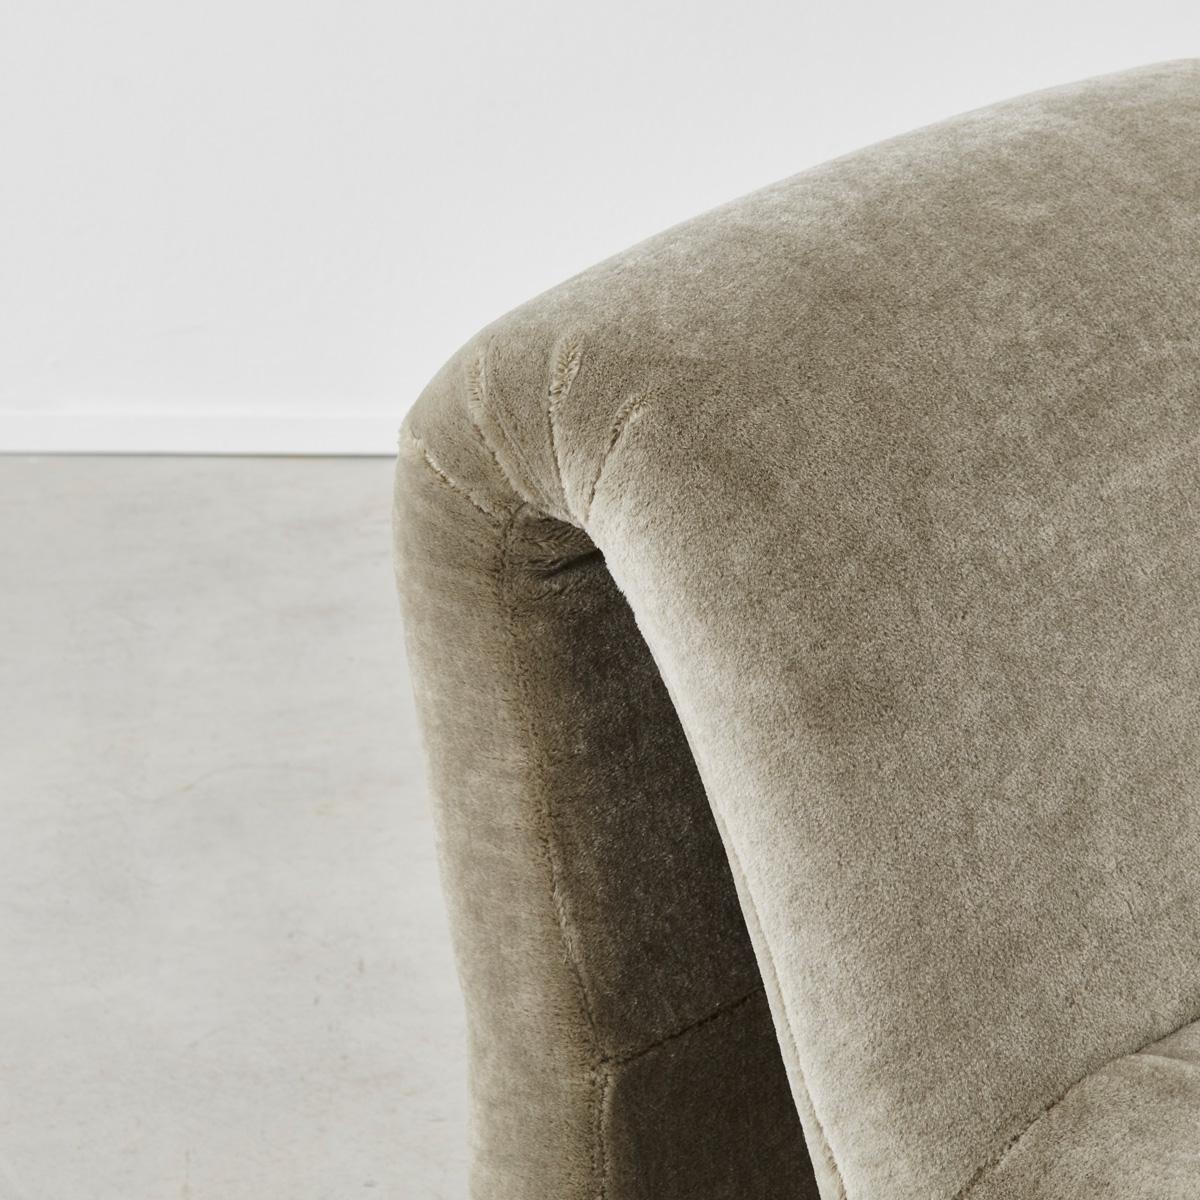 Late 20th Century Étienne Fermigier Actual Wavy Lounge Chair, Actual Edition, 1972